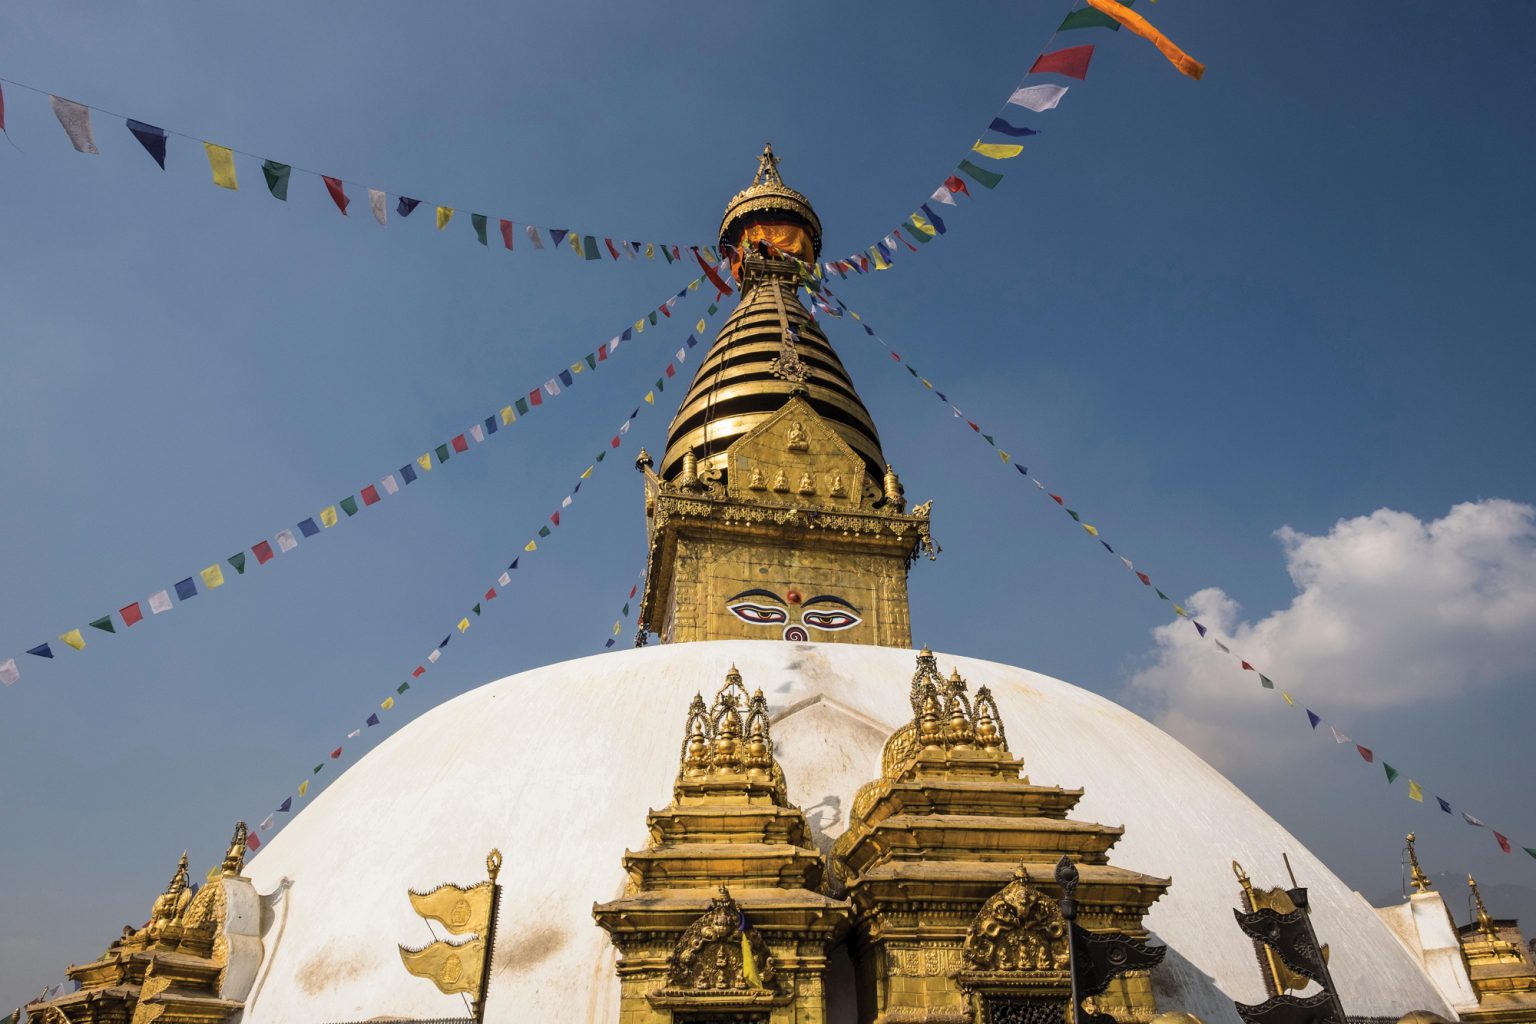 Nepal adventureTour Packages - Book honeymoon ,family,adventure tour packages to Nepal adventure|Travel Knits